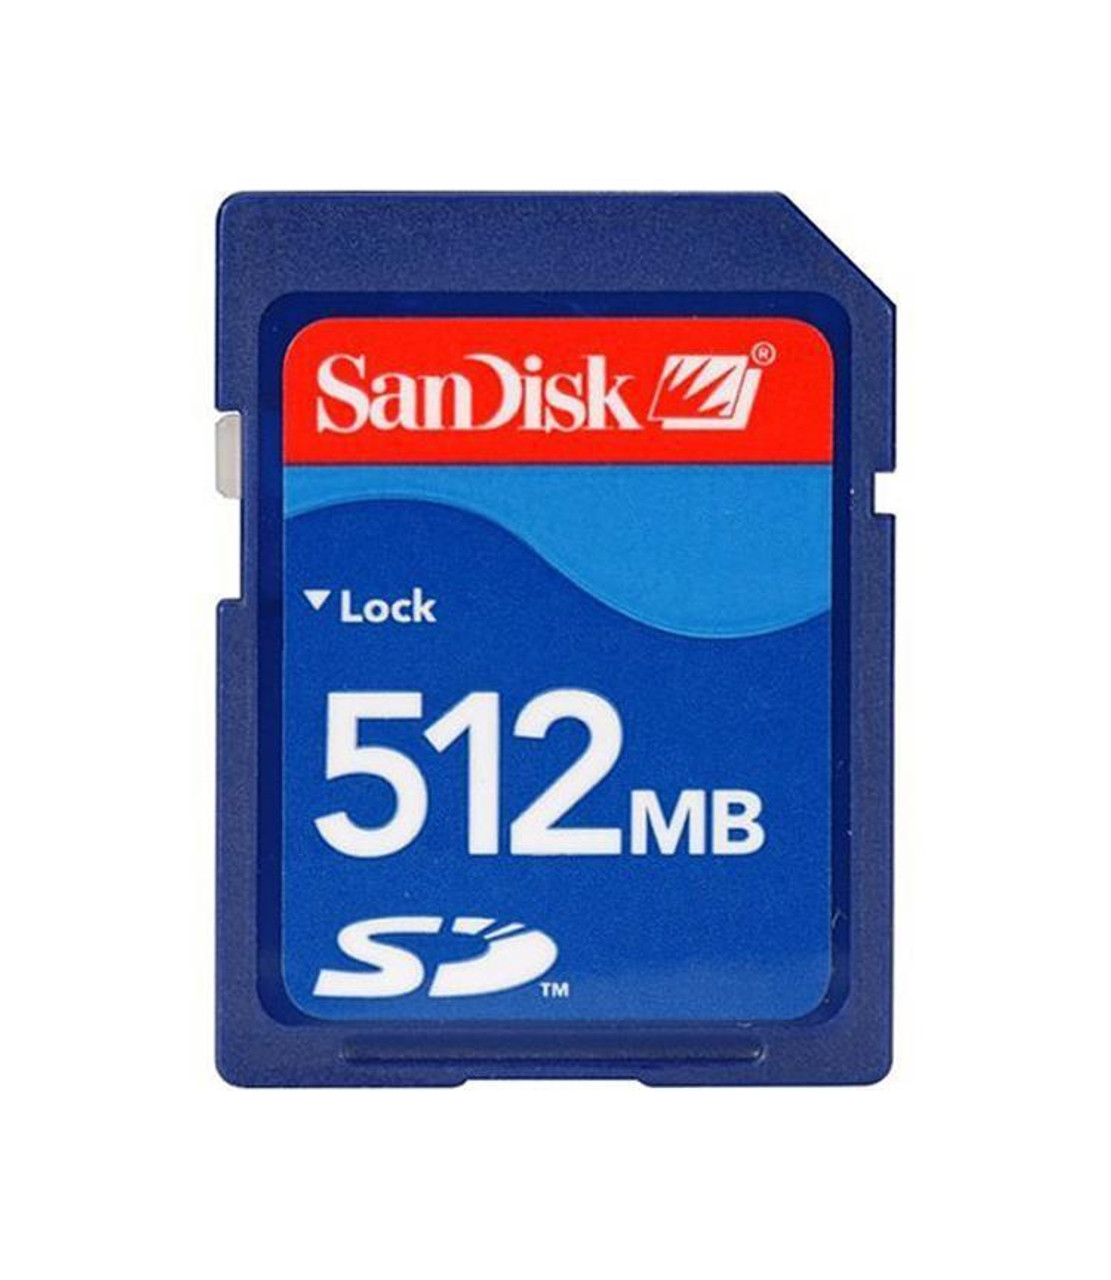 SDSDB512 SanDisk 512MB Secure Digital (SD) Flash Memory Card